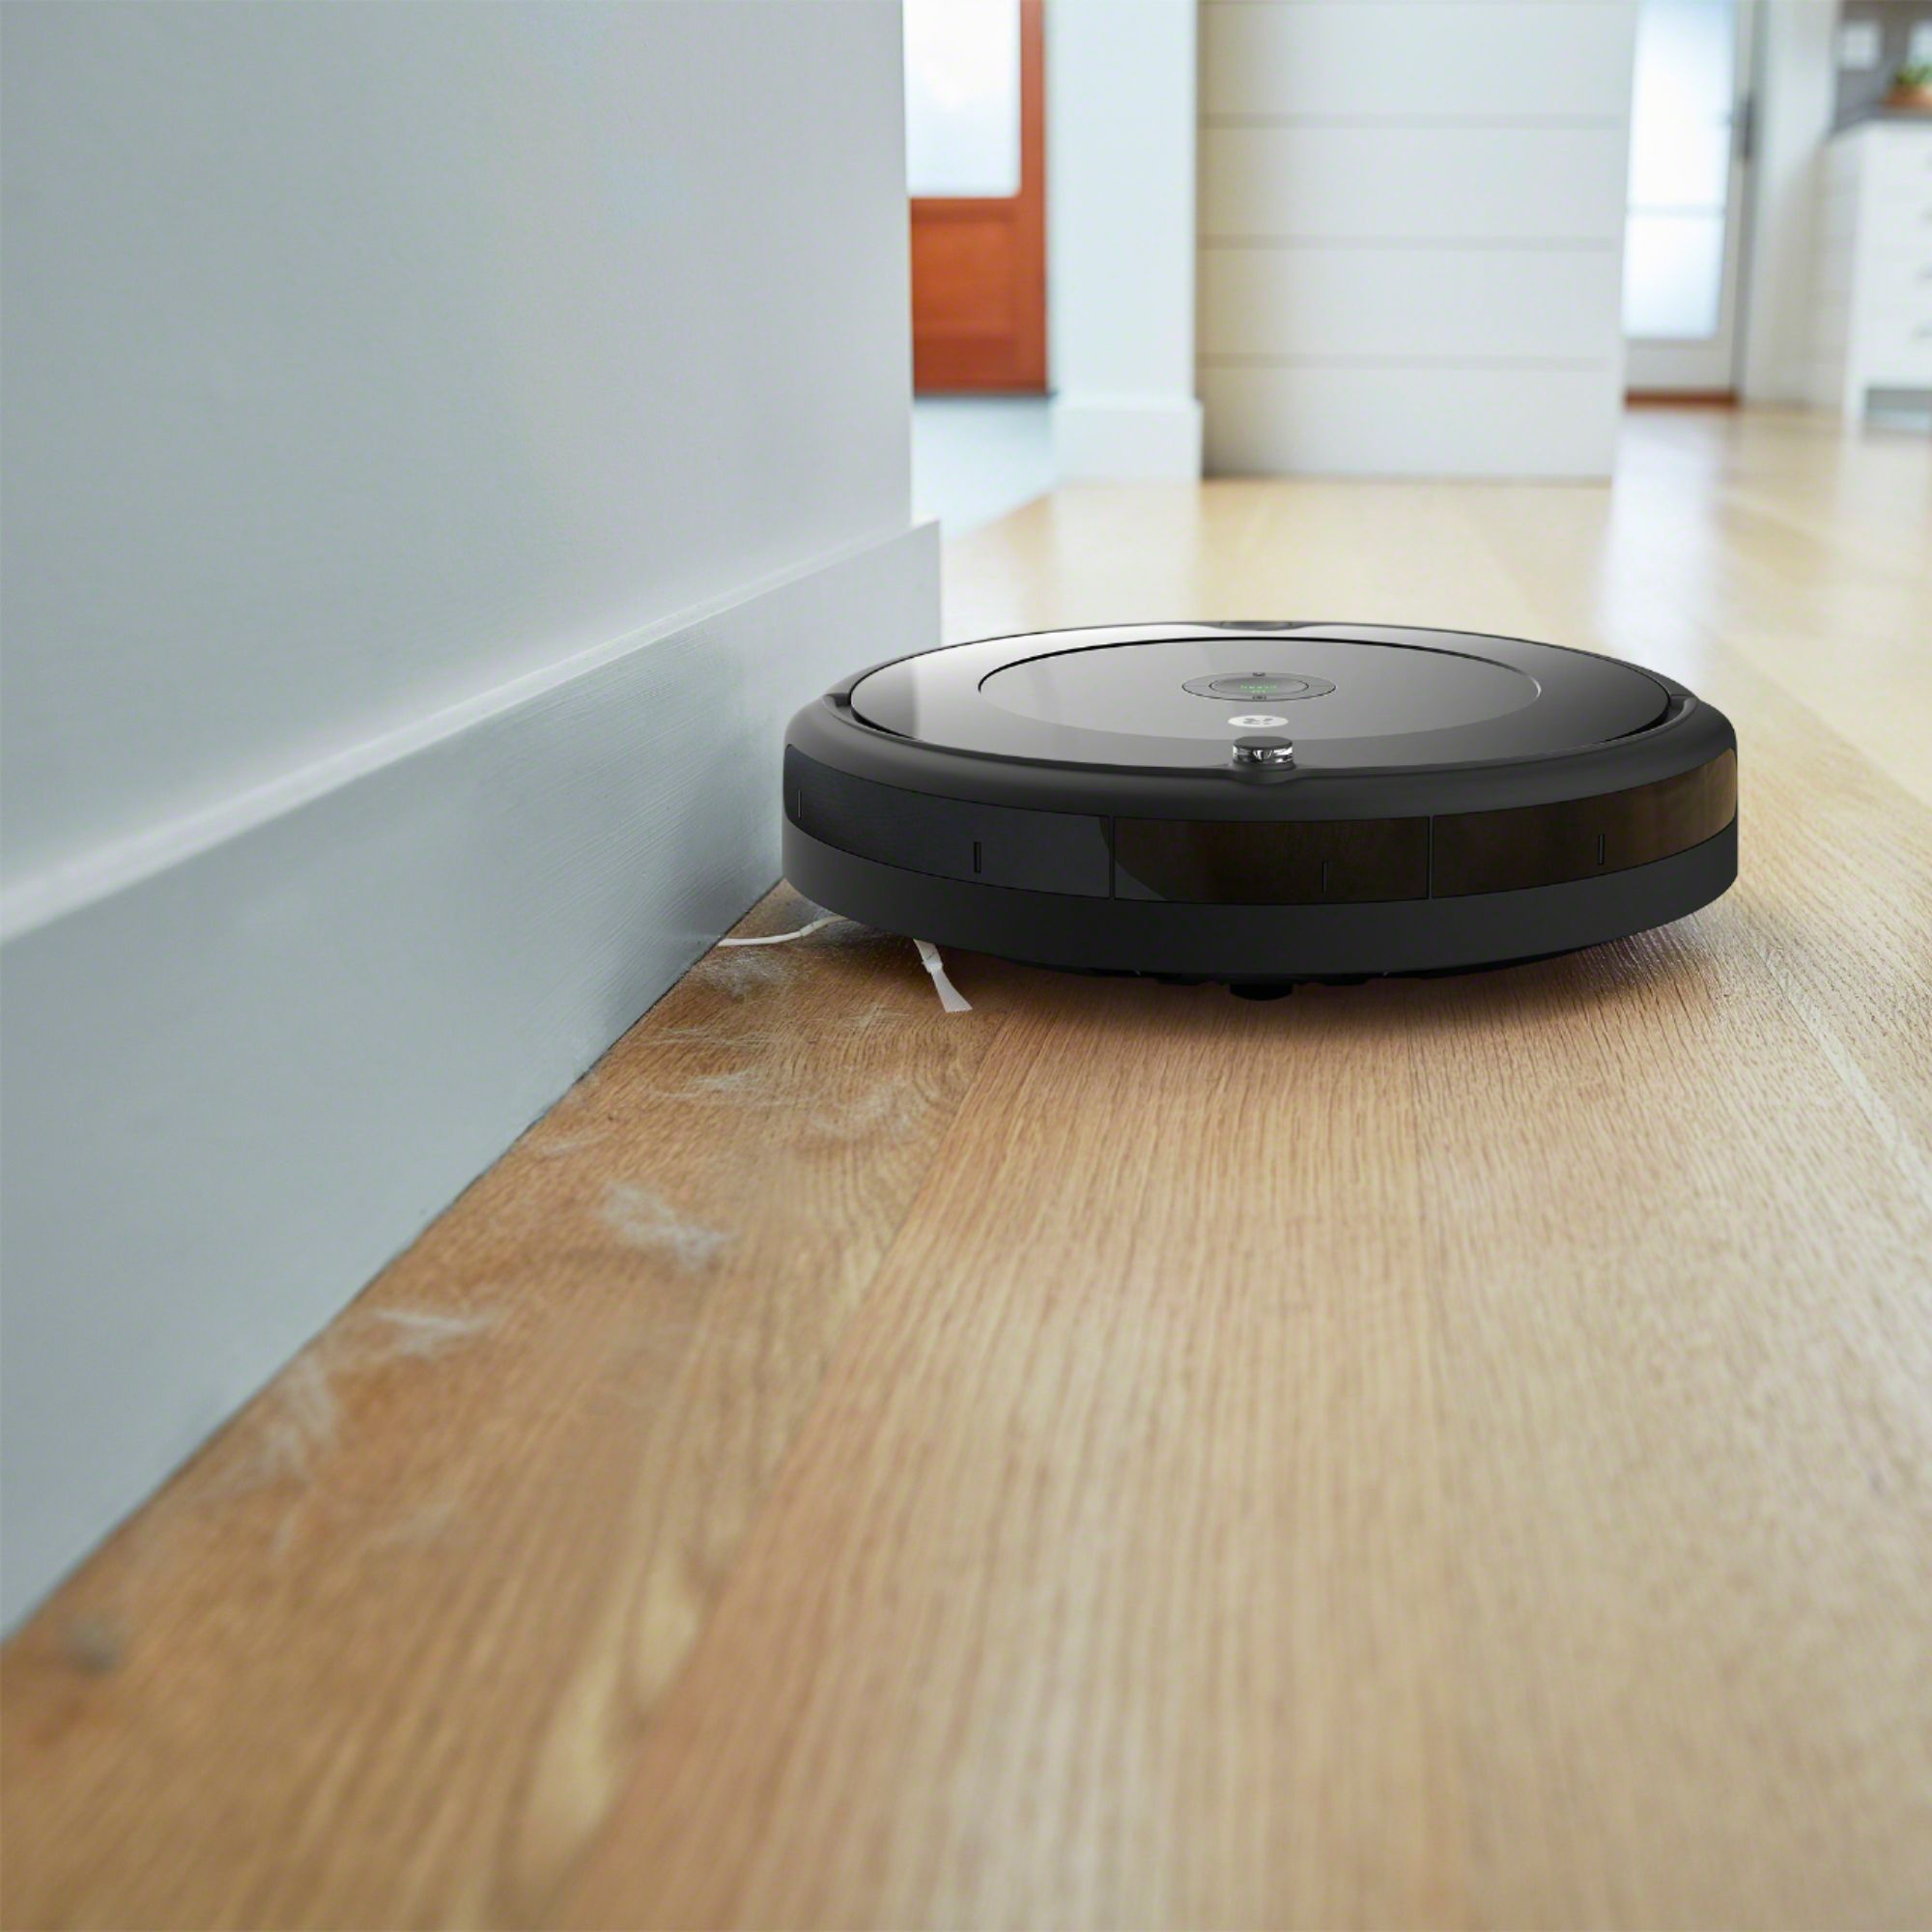 Irobot Roomba 694 Wi Fi Connected Robot